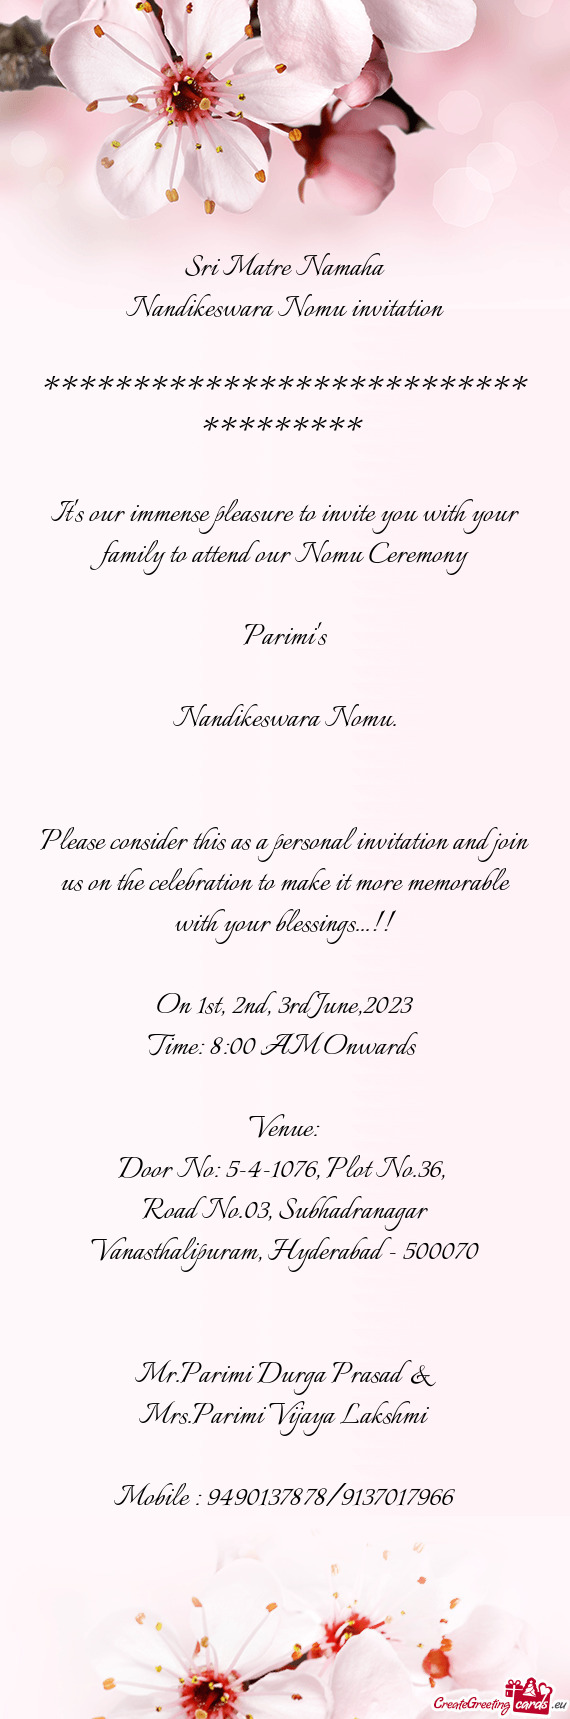 Nandikeswara Nomu invitation